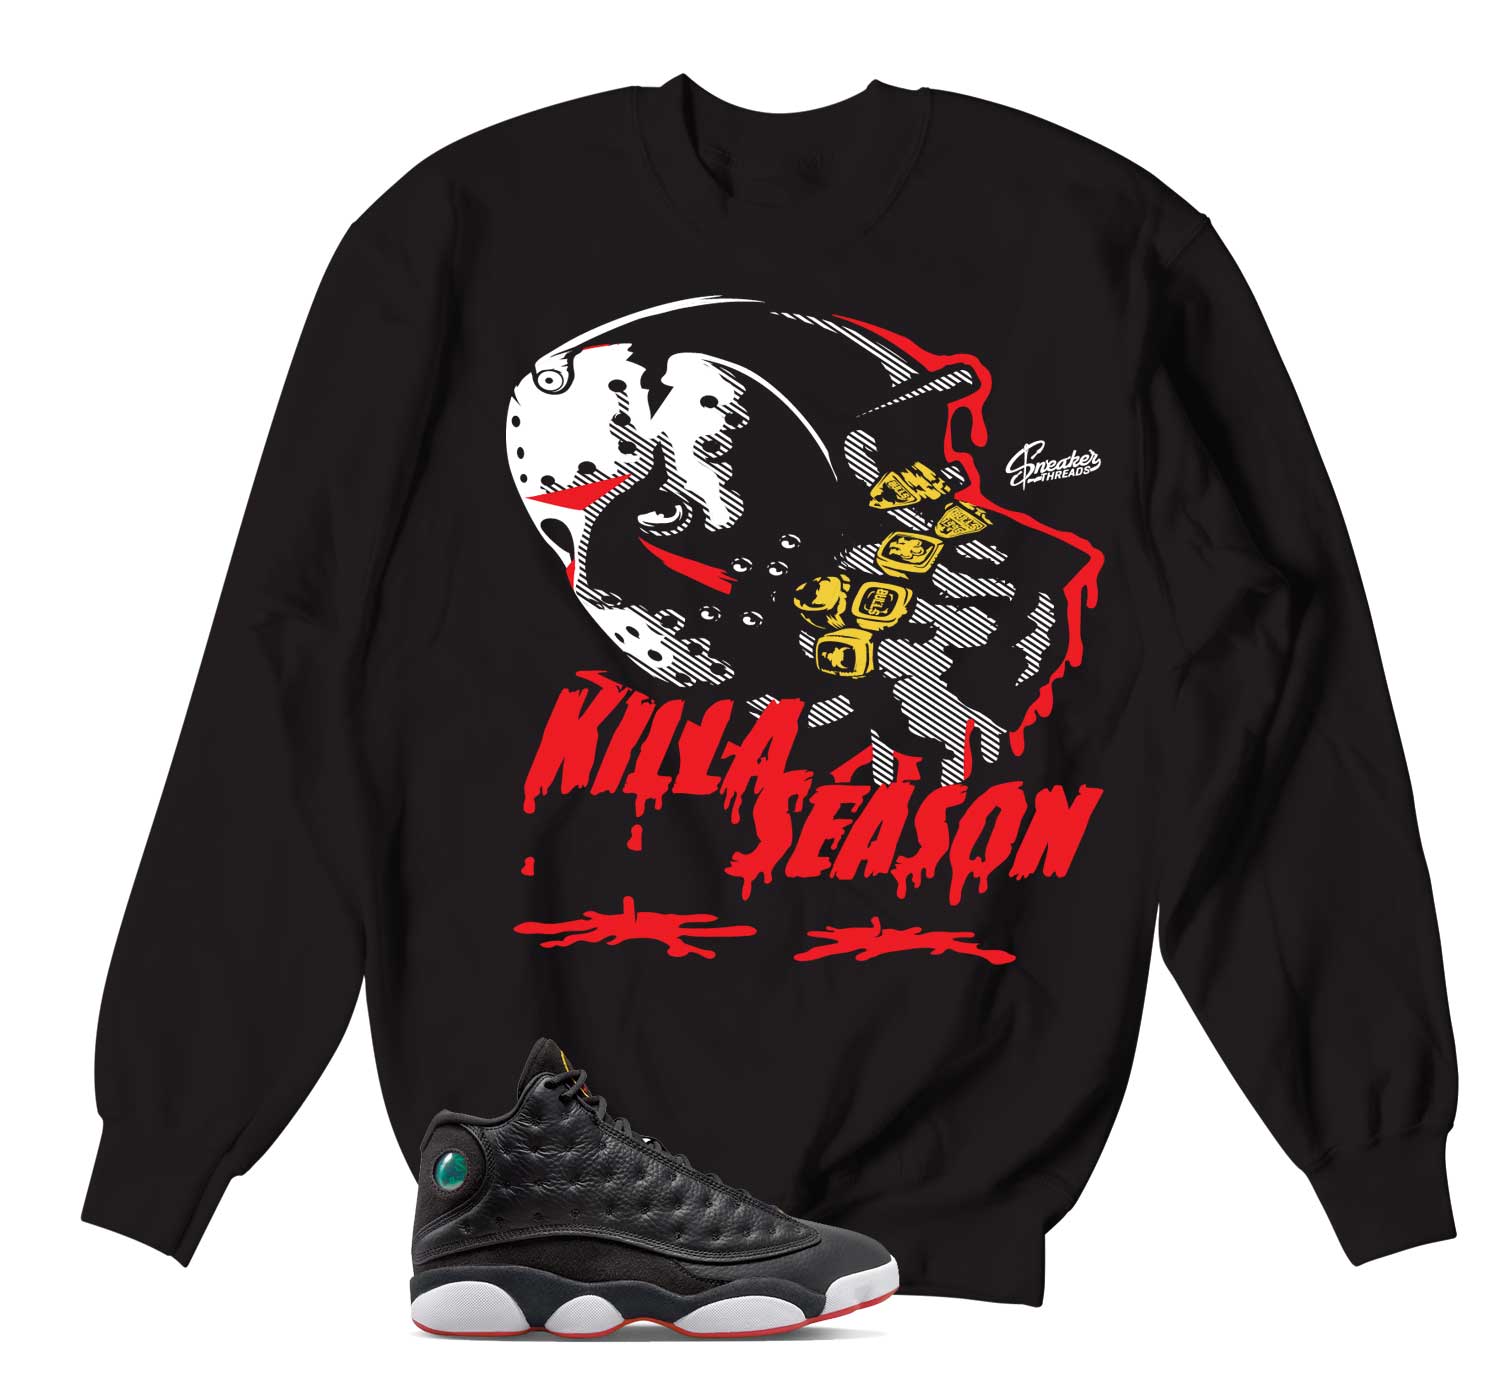 Retro 13 Playoff Sweater - Killa Season - Black